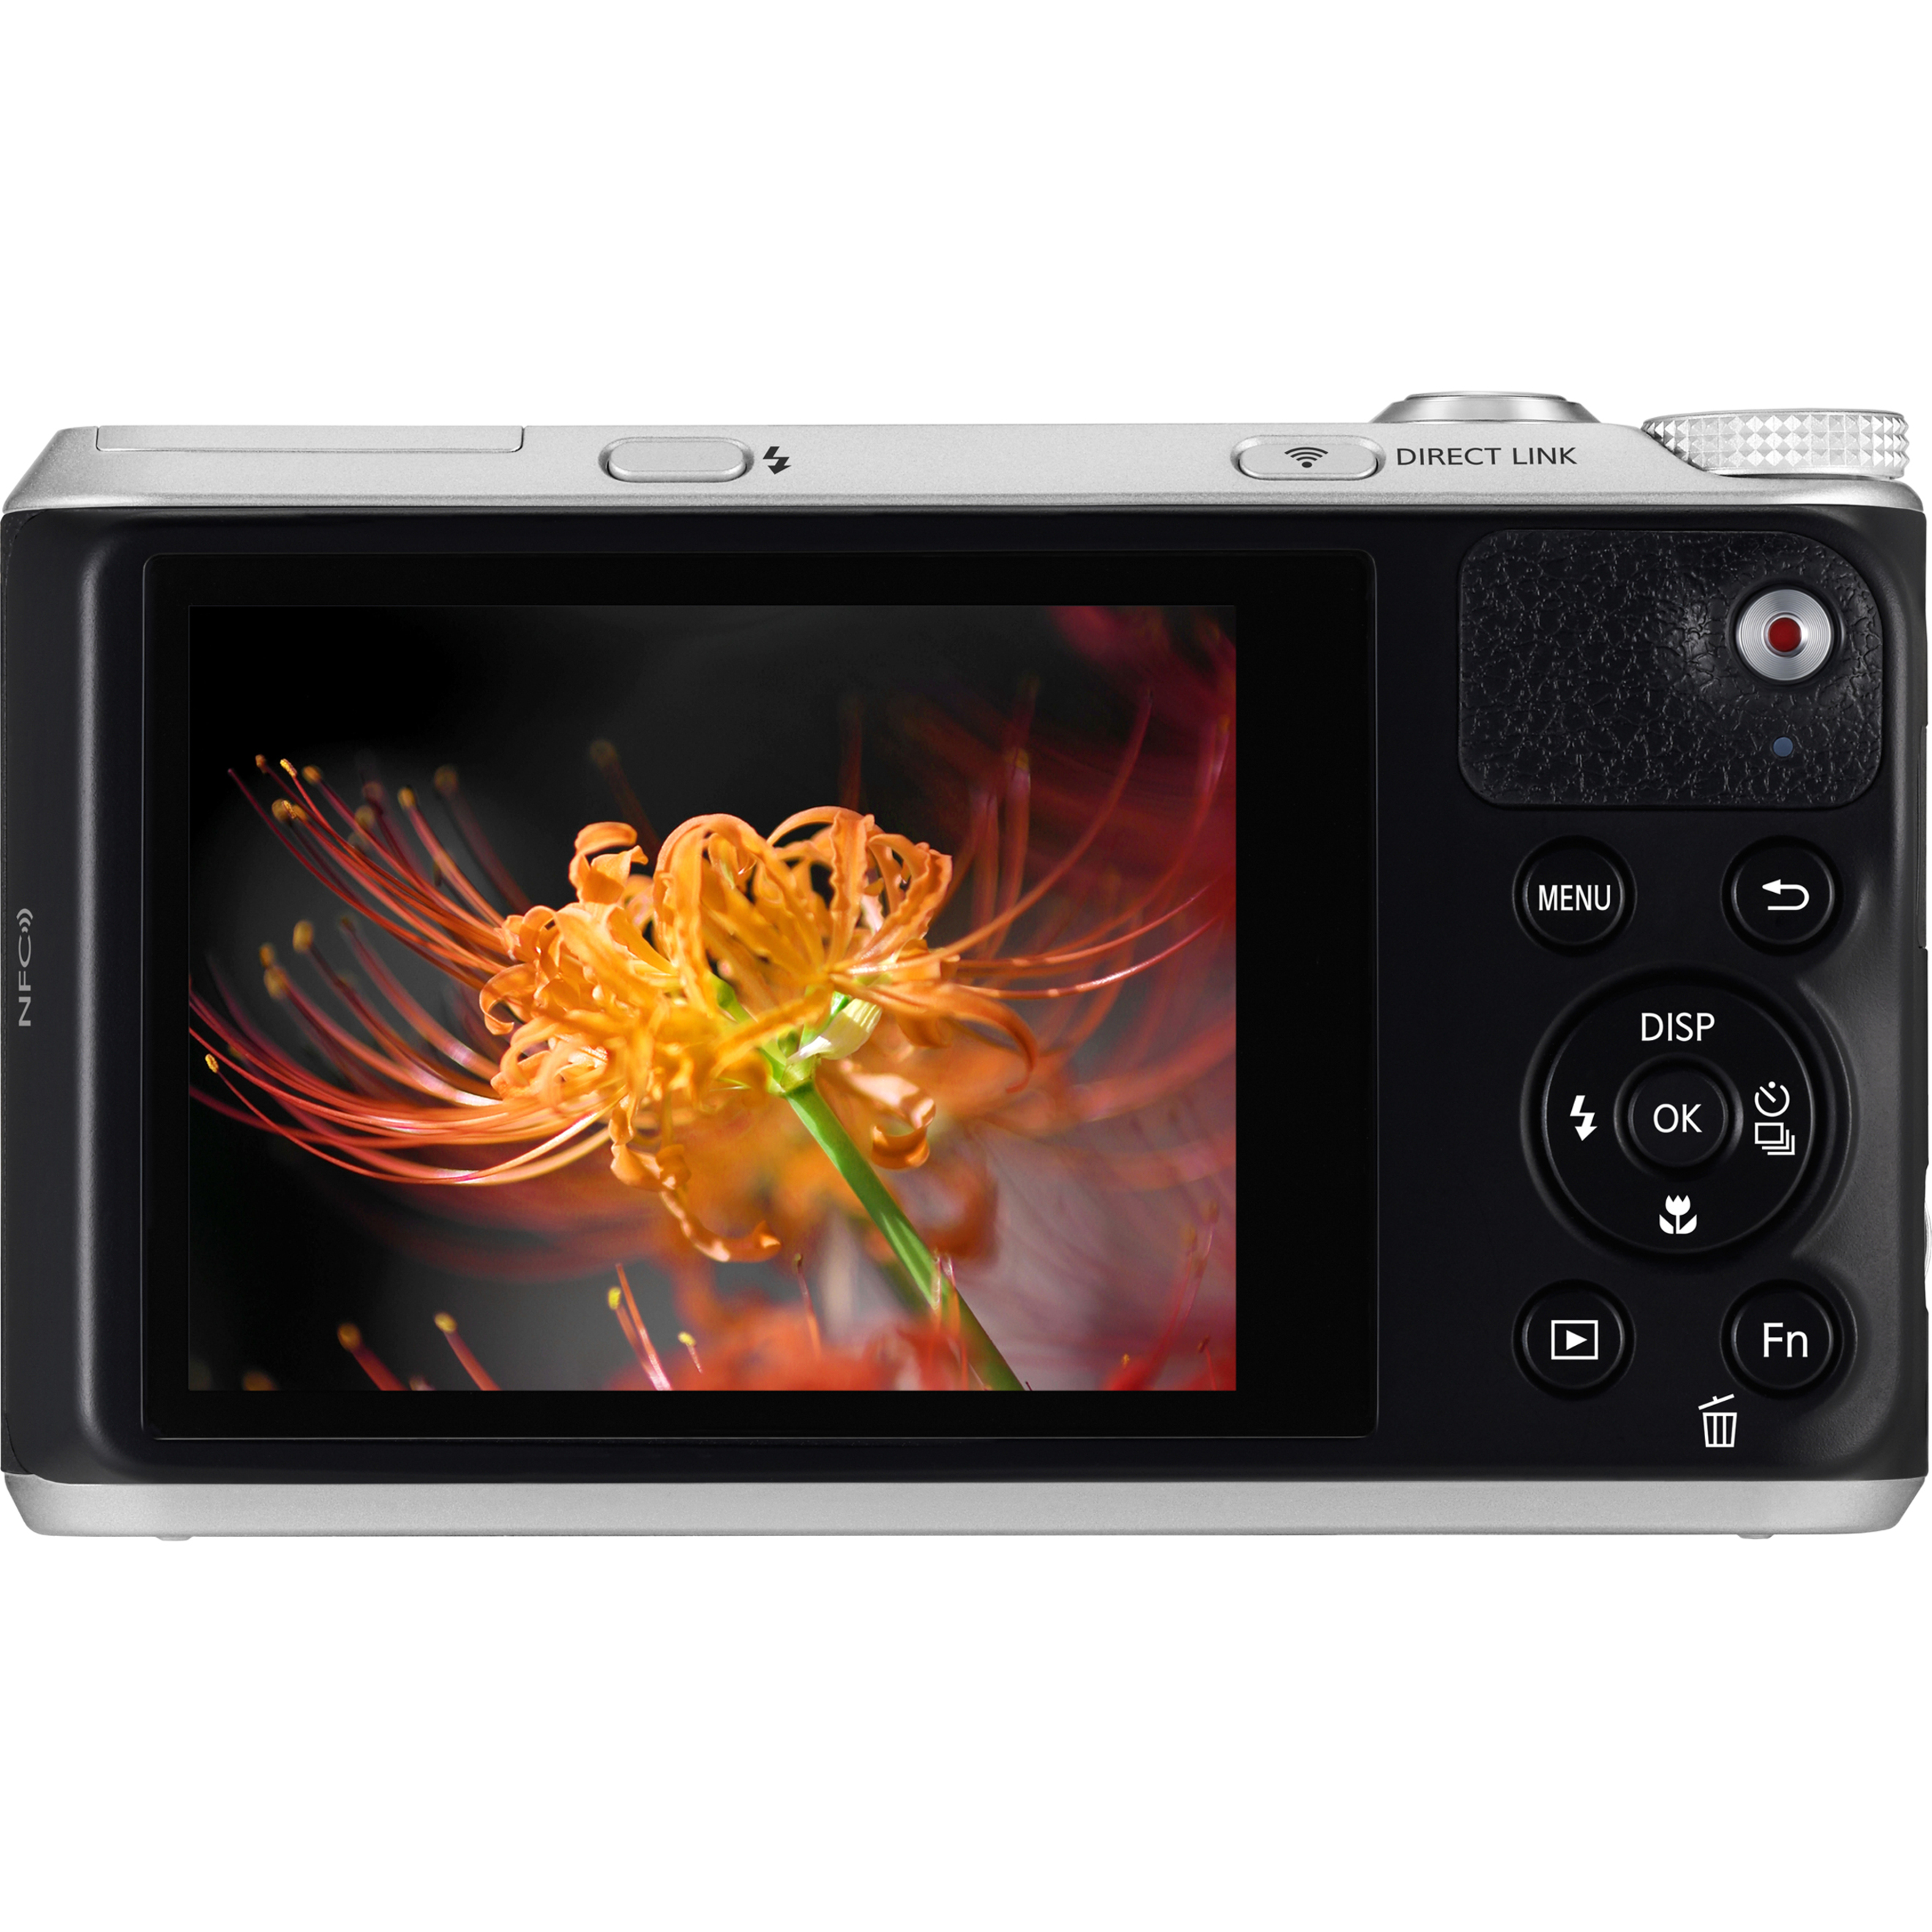 Samsung WB350F 16.3 Megapixel Compact Camera, Black - image 2 of 5